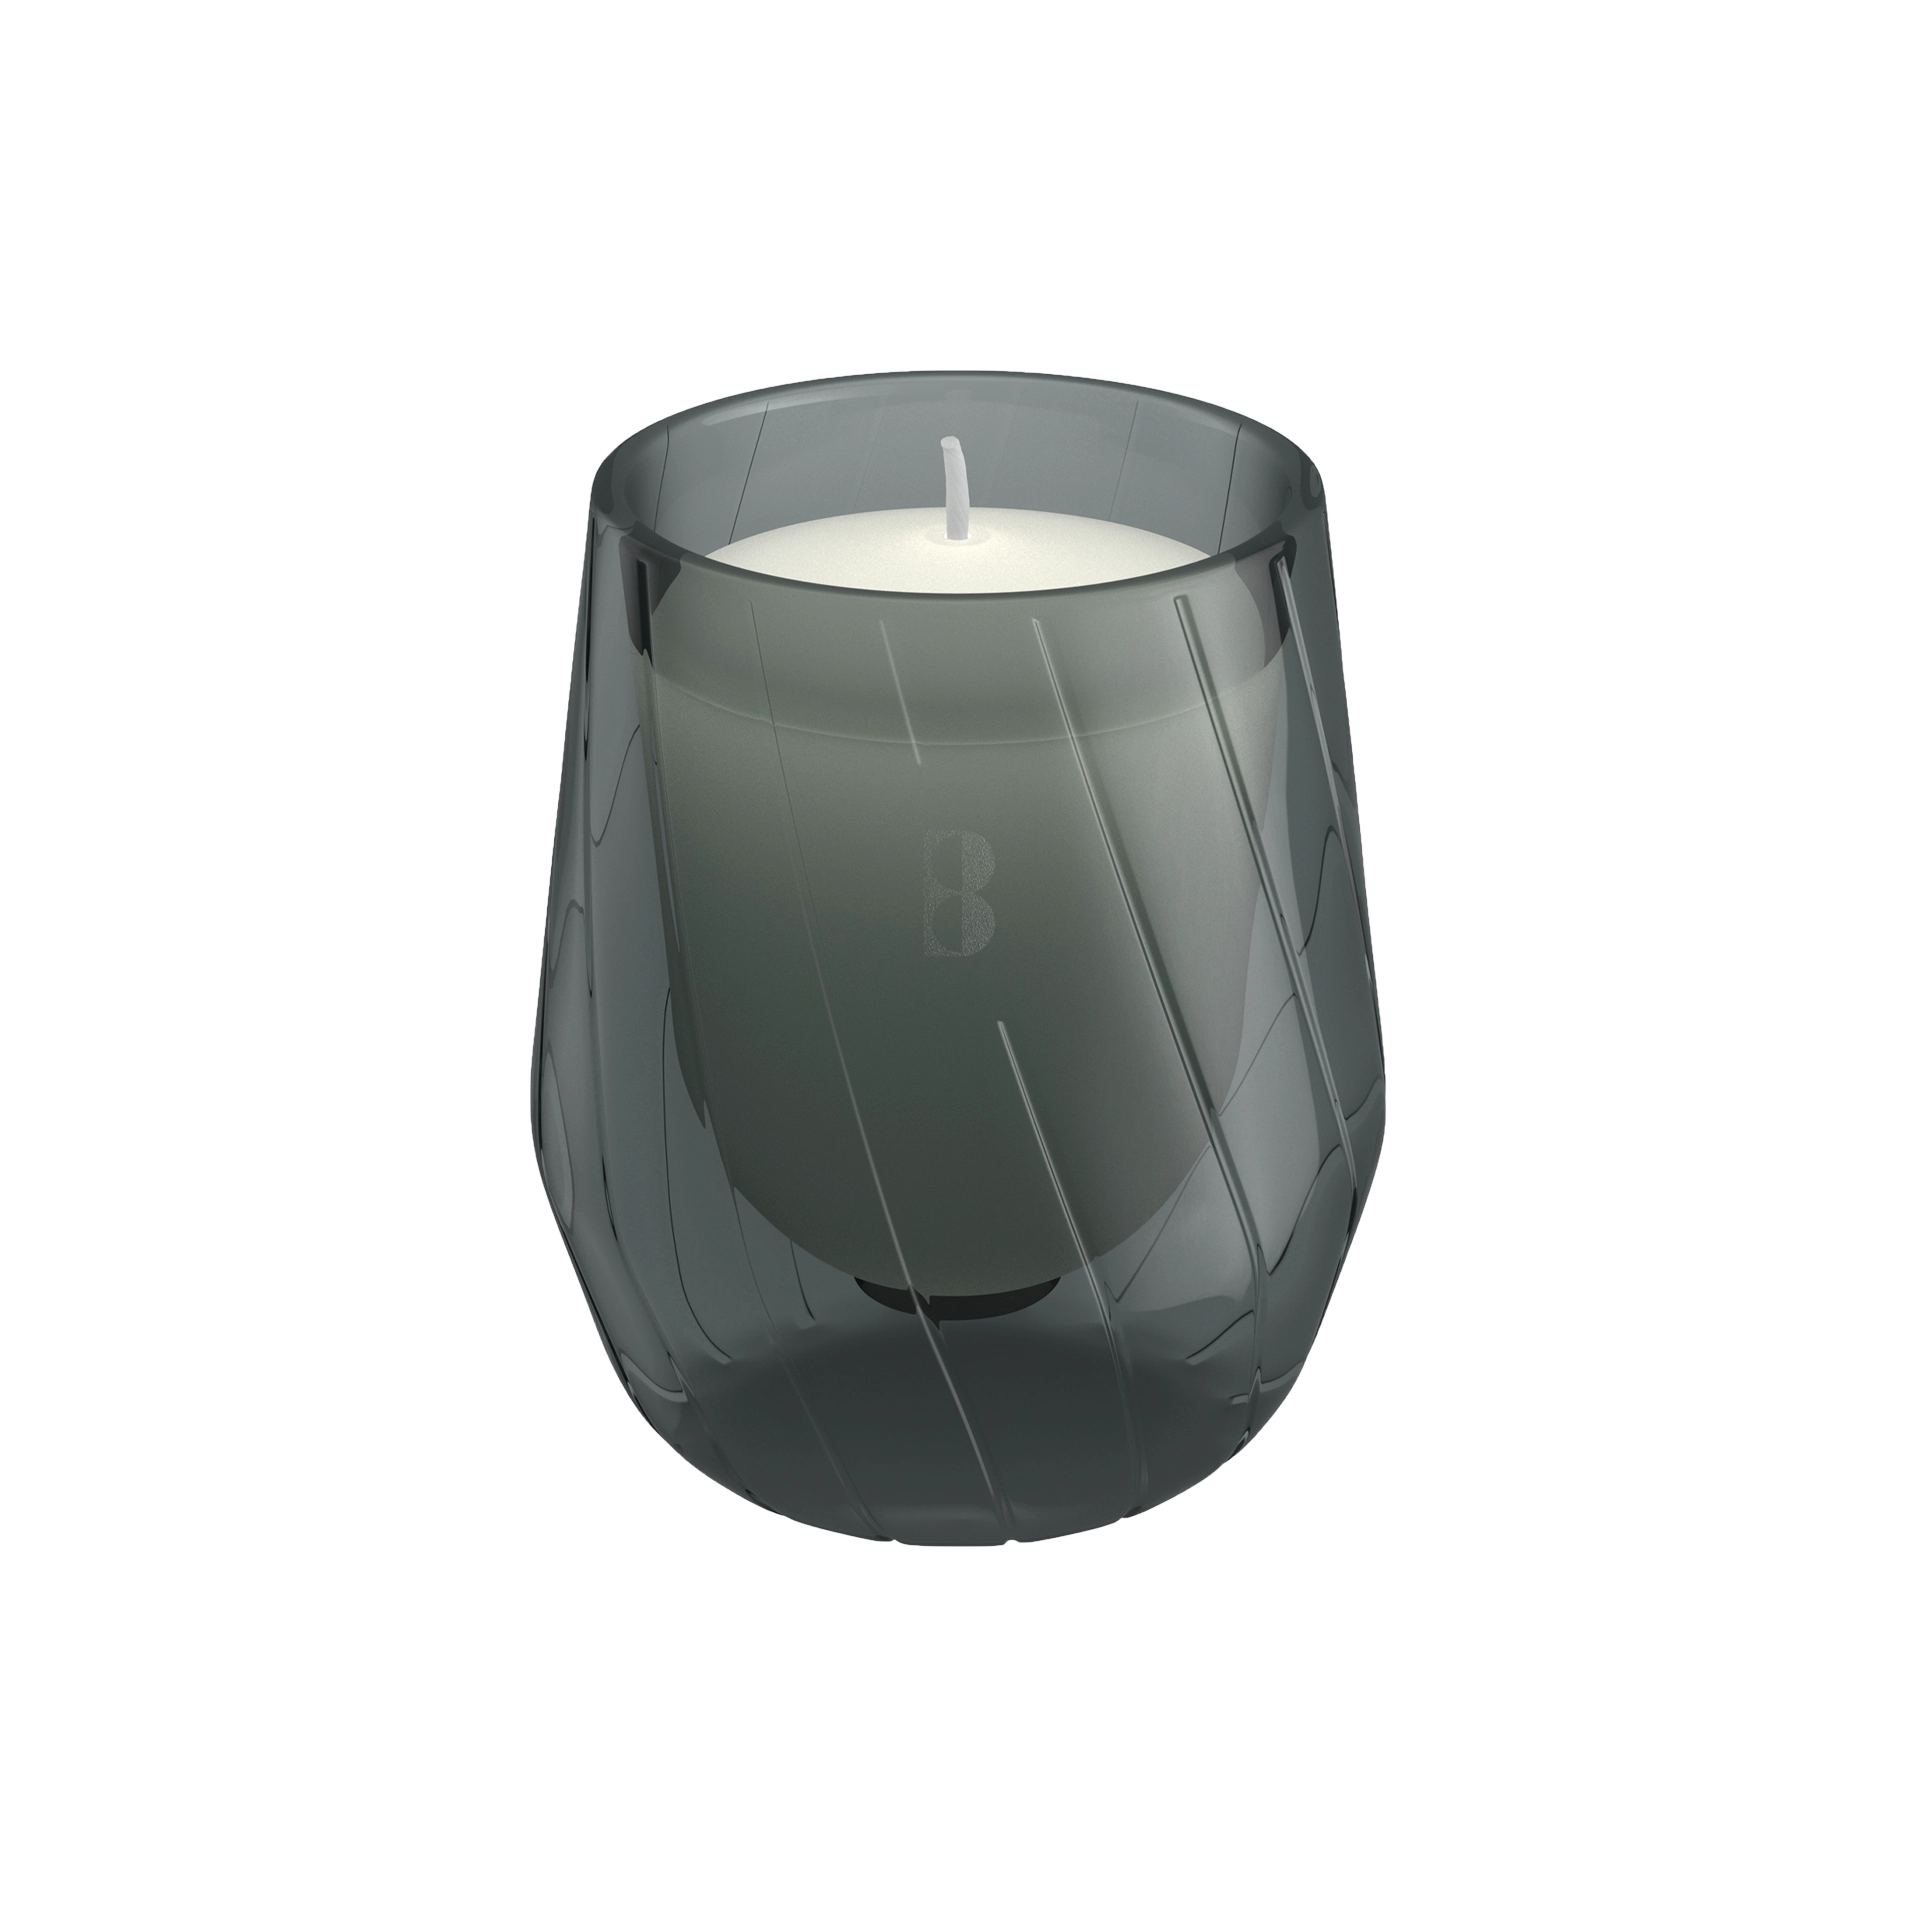 Kerzenhalter | StylEcoDoppelglas | grauØ 9,6x h 11,2 cmMundgeblasenSpülmaschinenfest  